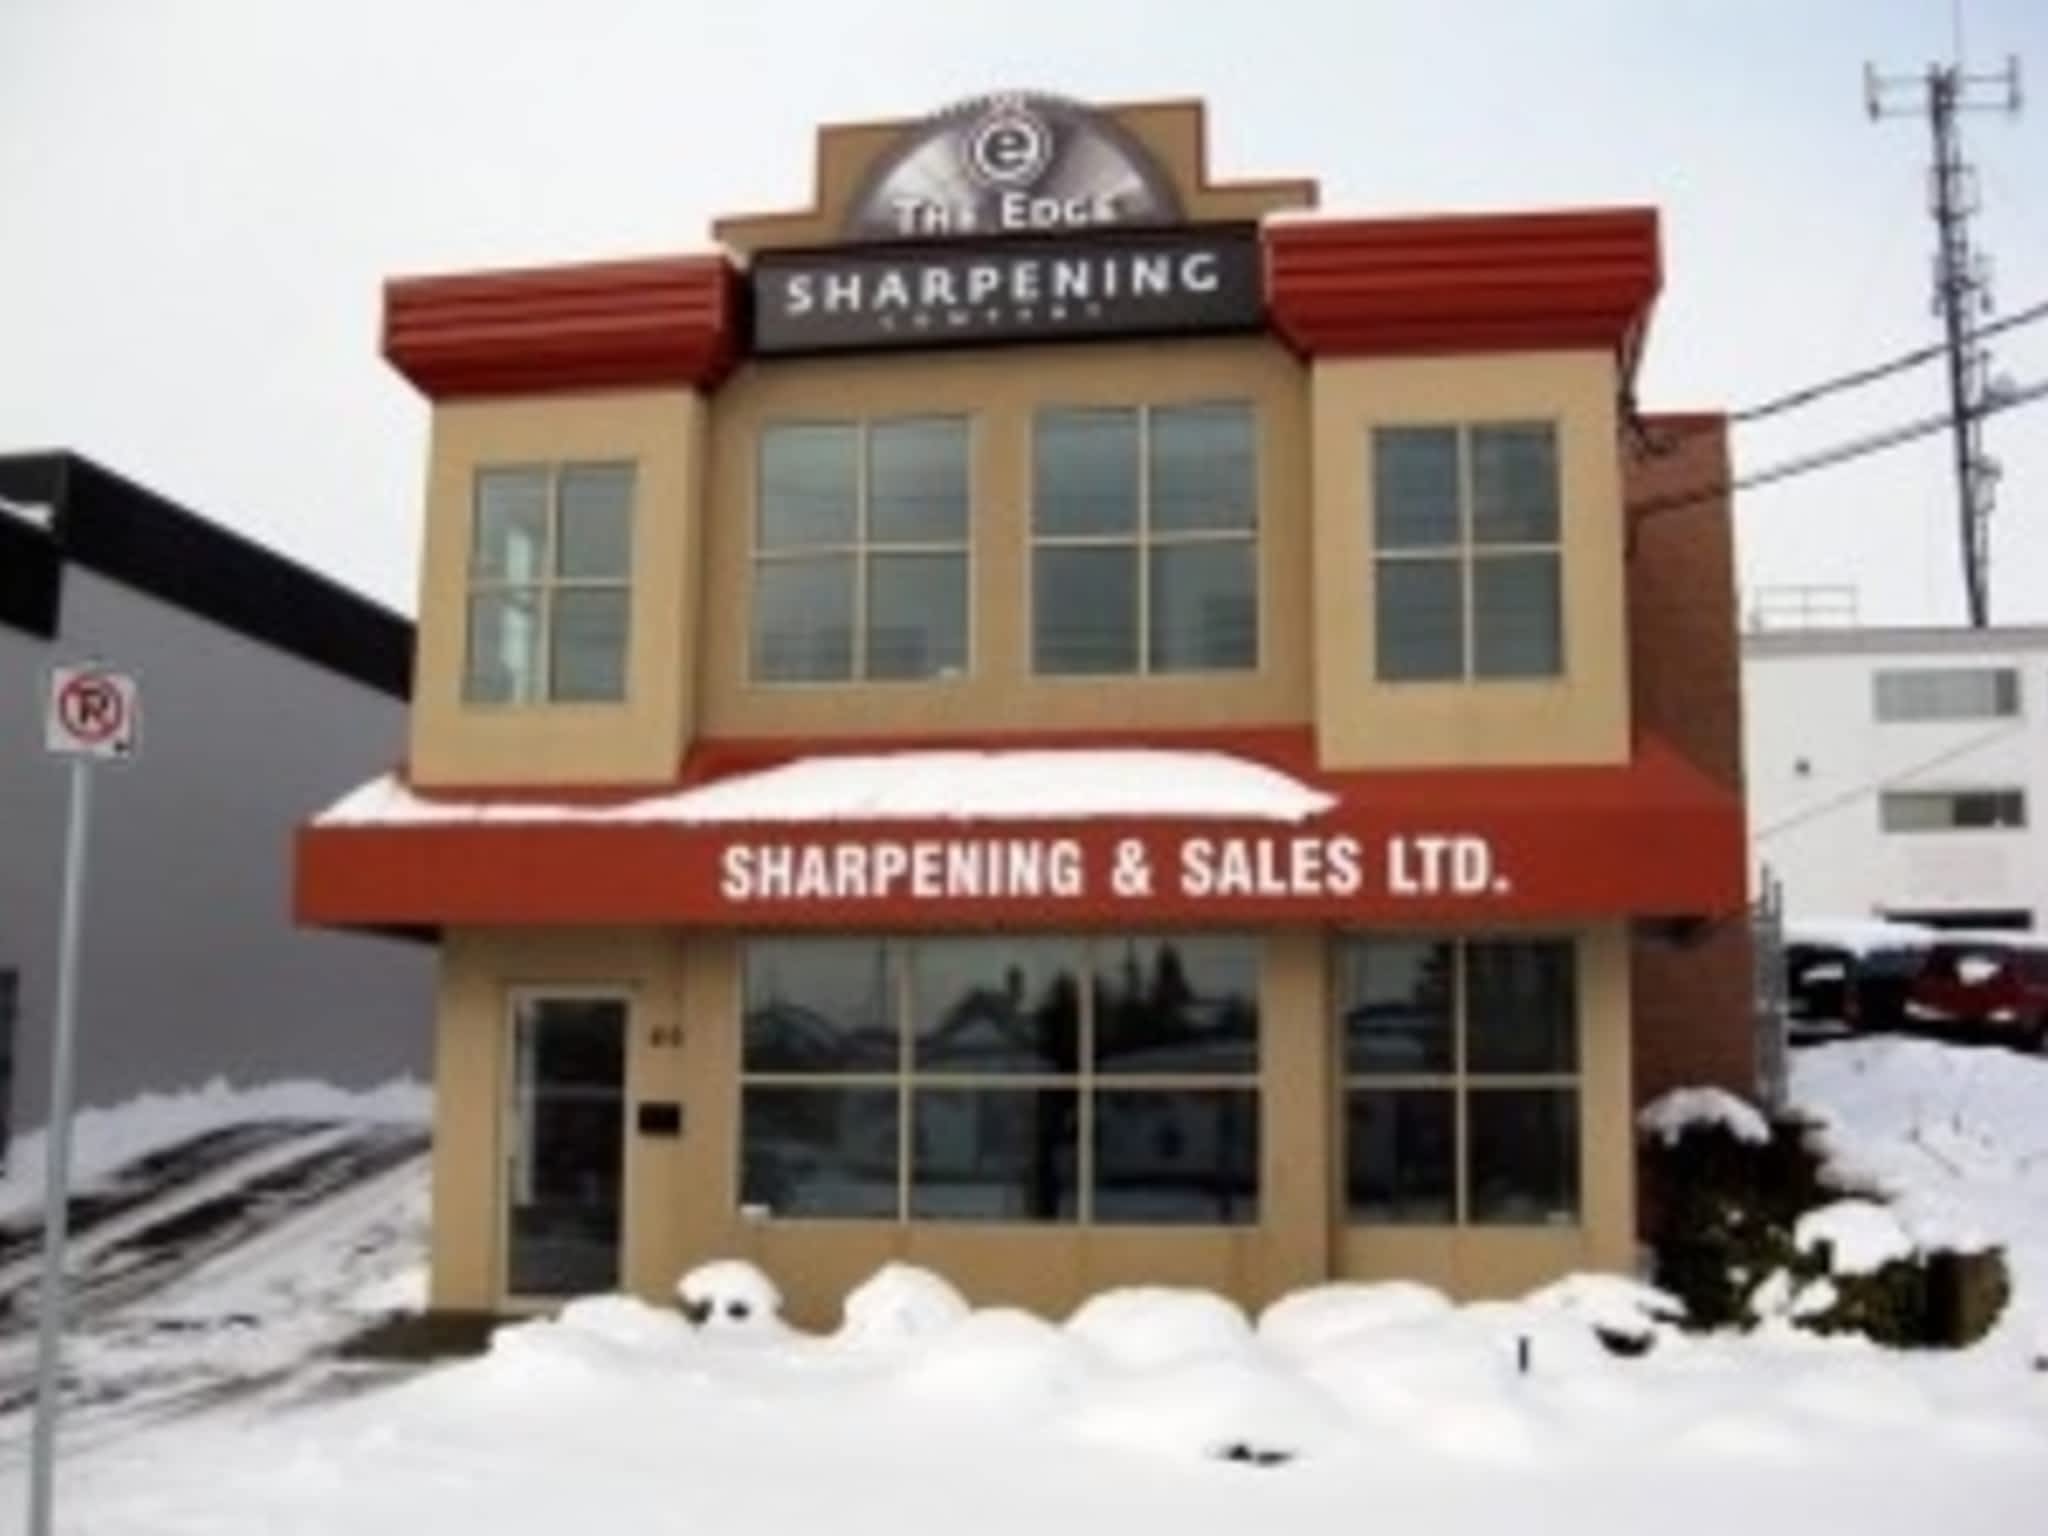 photo The Edge Sharpening Co Ltd